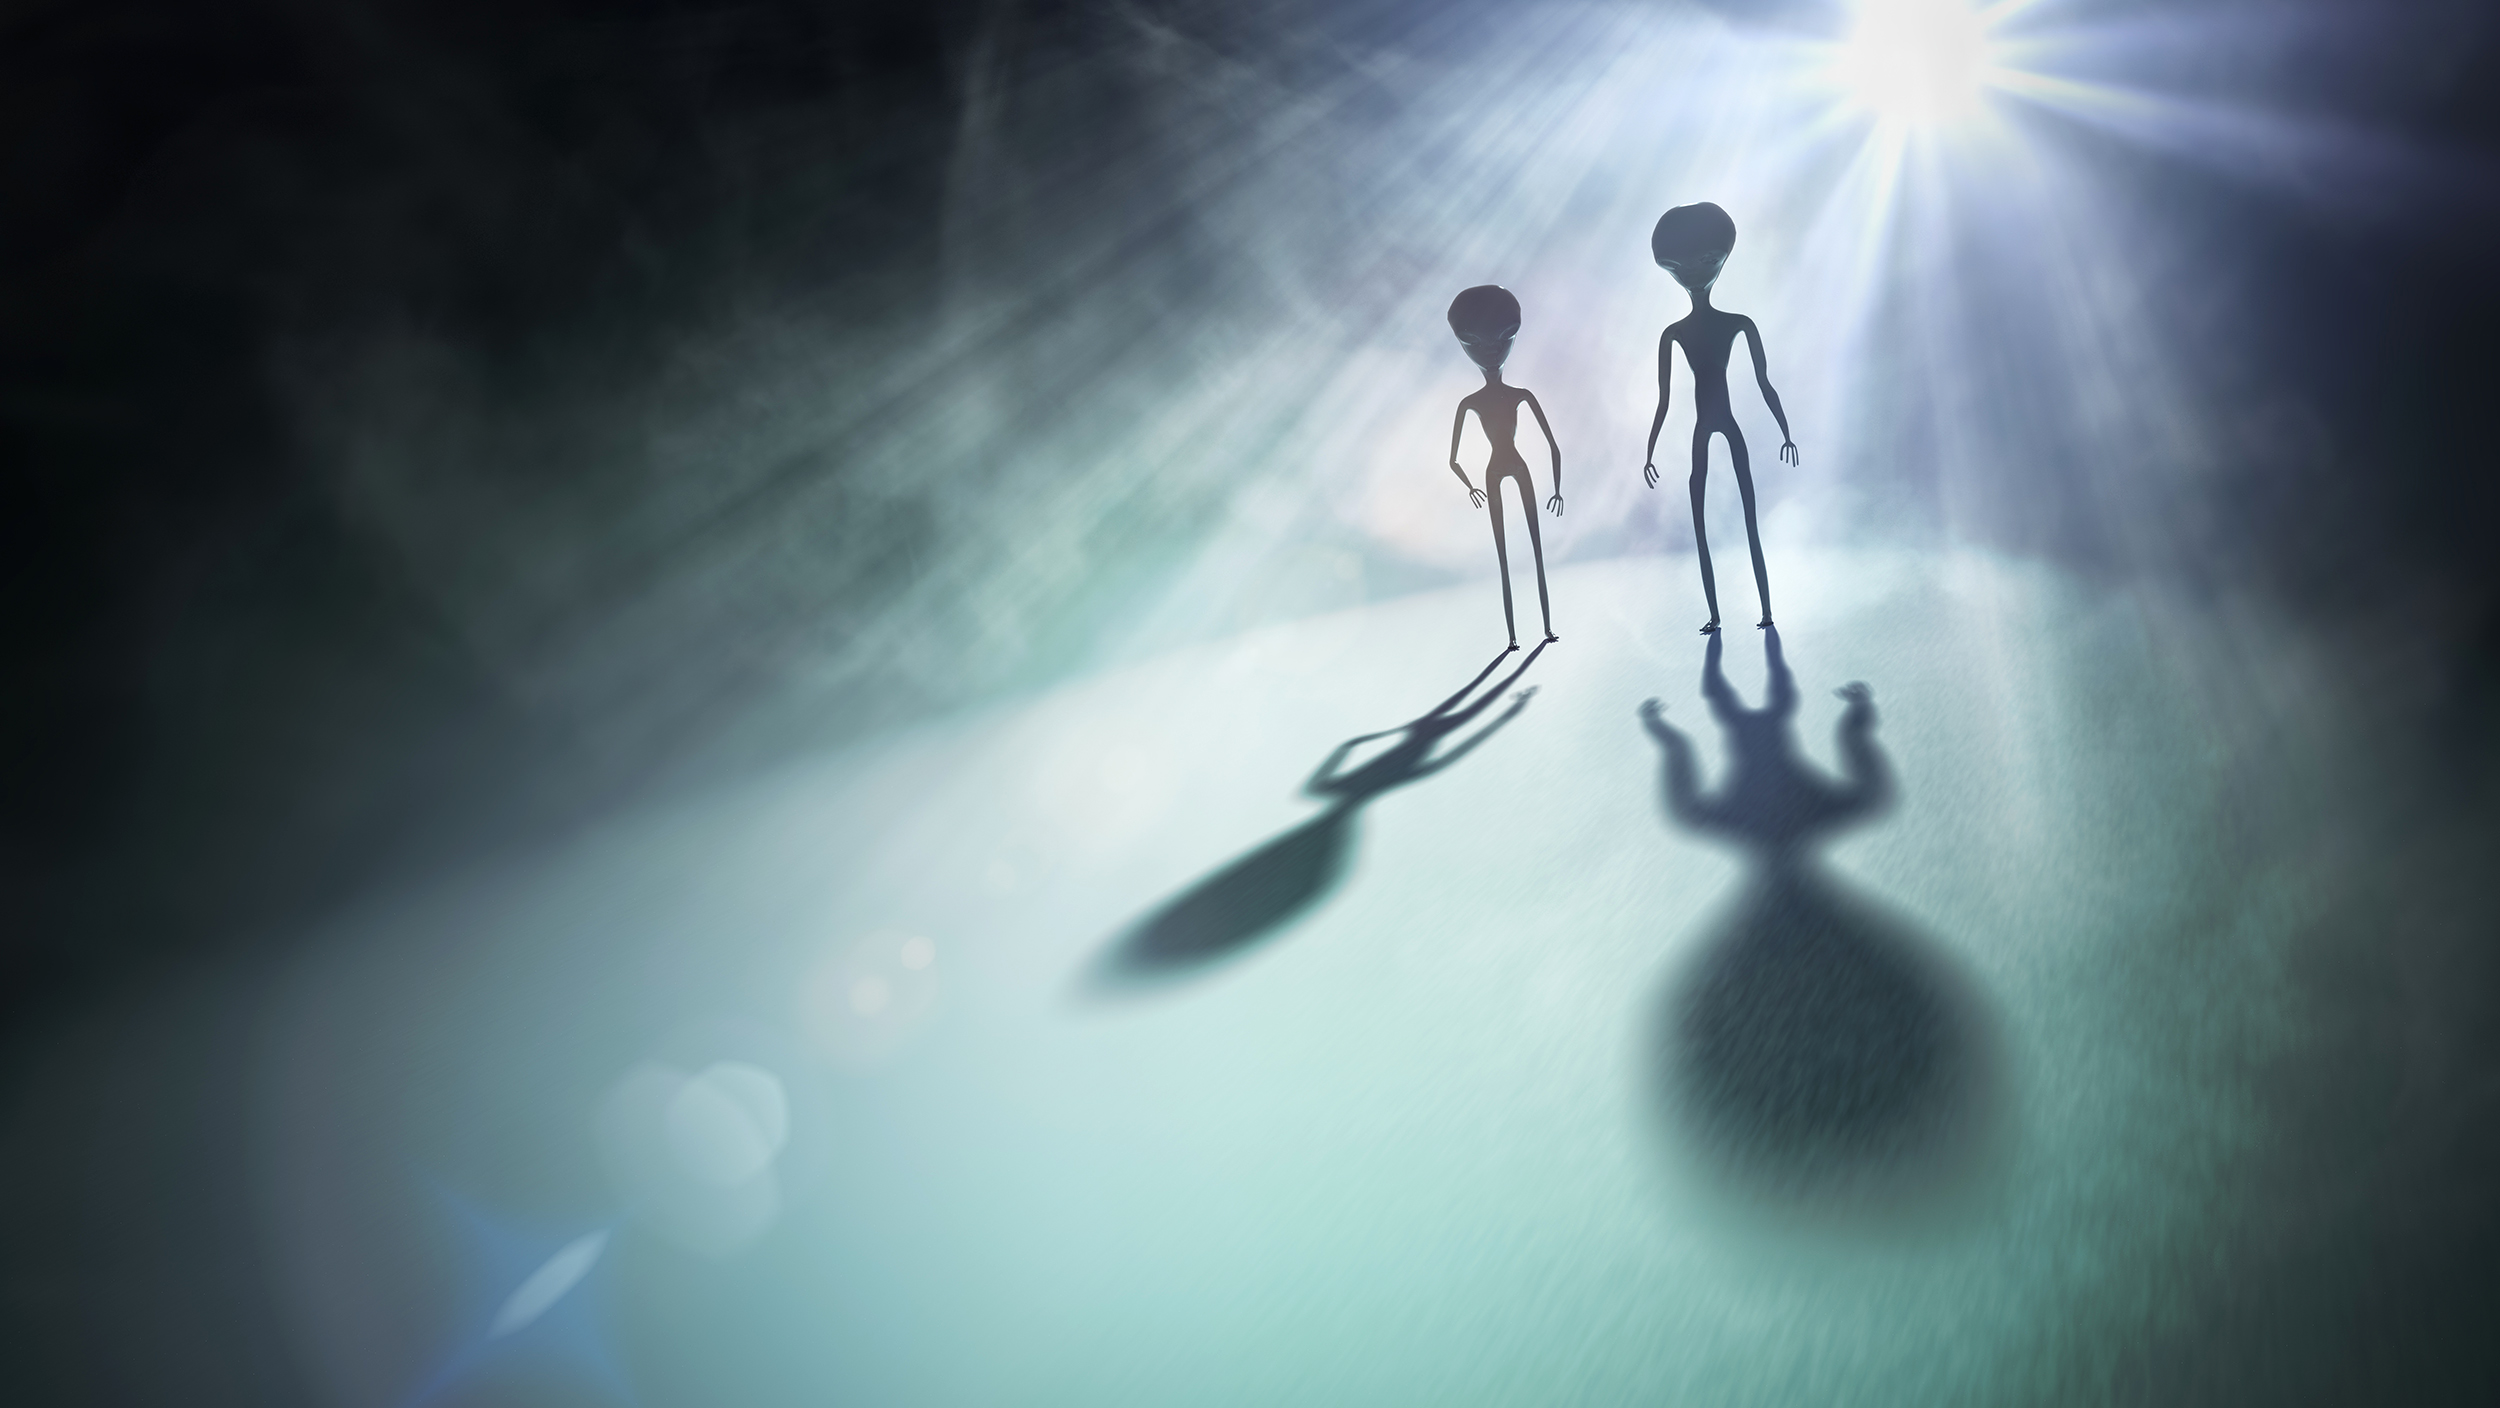 Extraterrestrial life